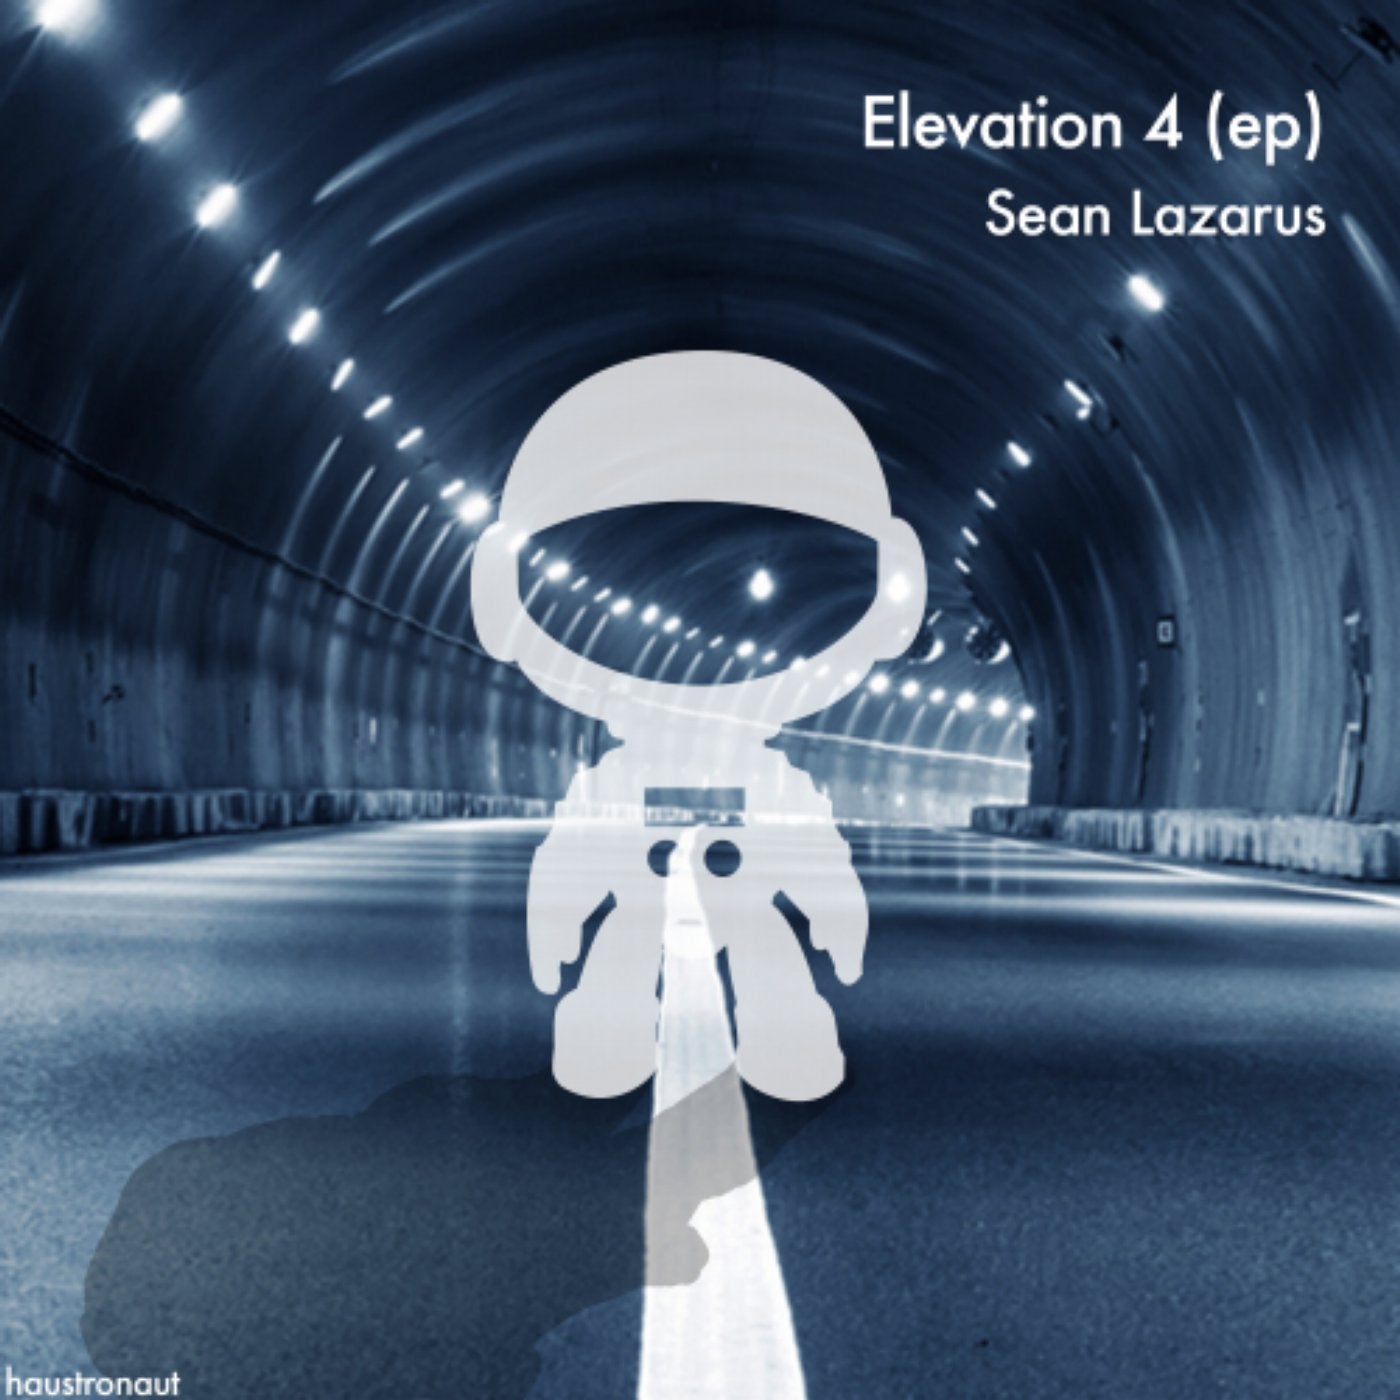 Elevation 4 (ep)